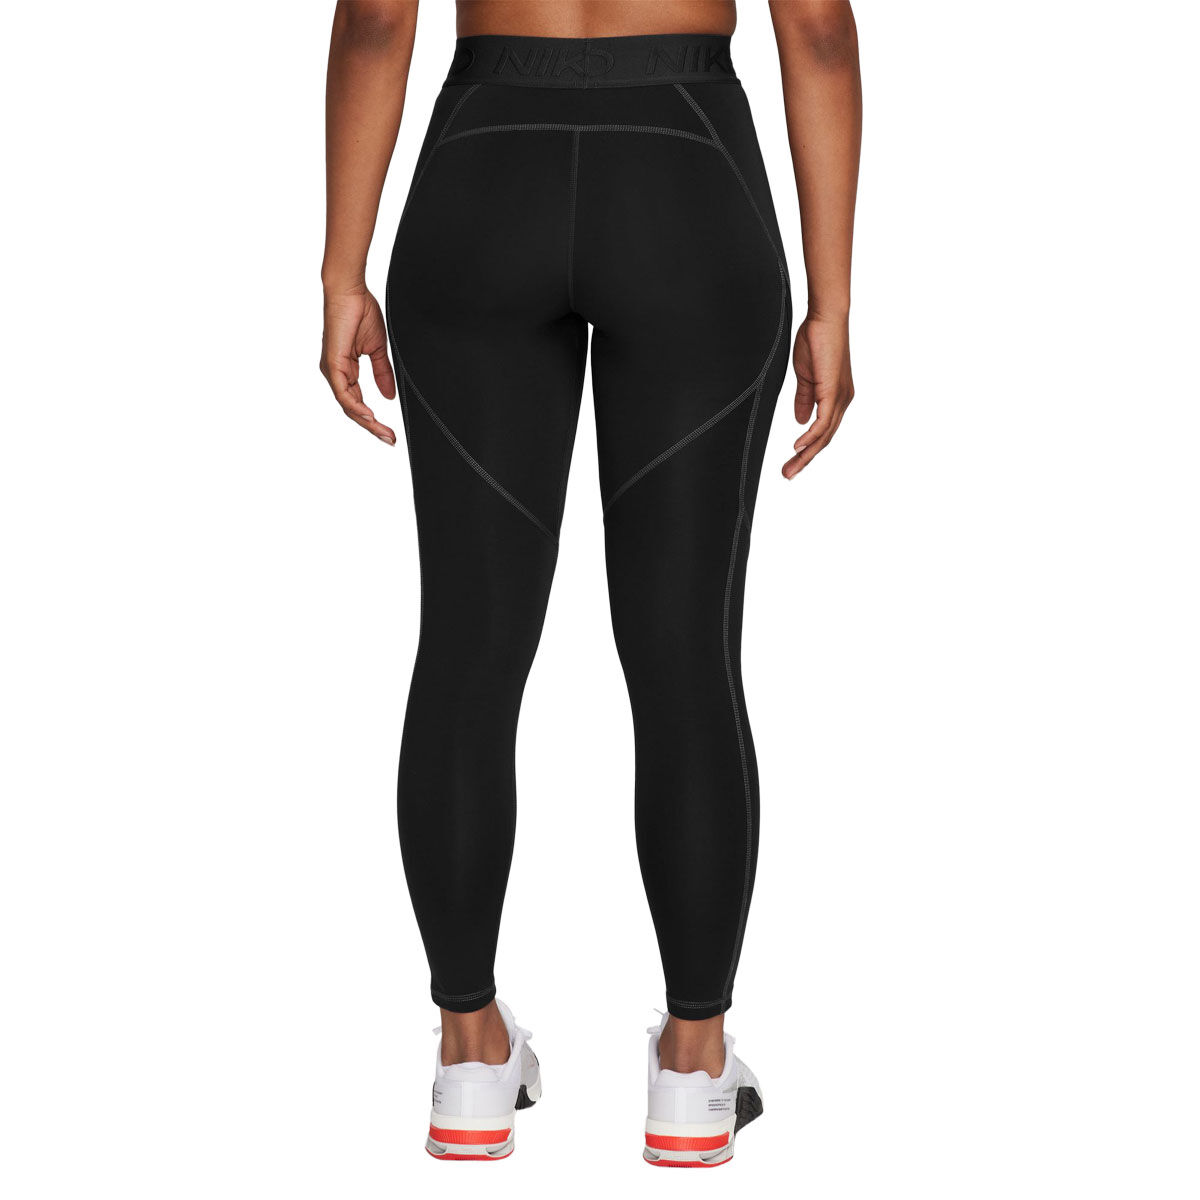 Nike Pro - Shorts, Leggings, Tights, Pants & more - rebel